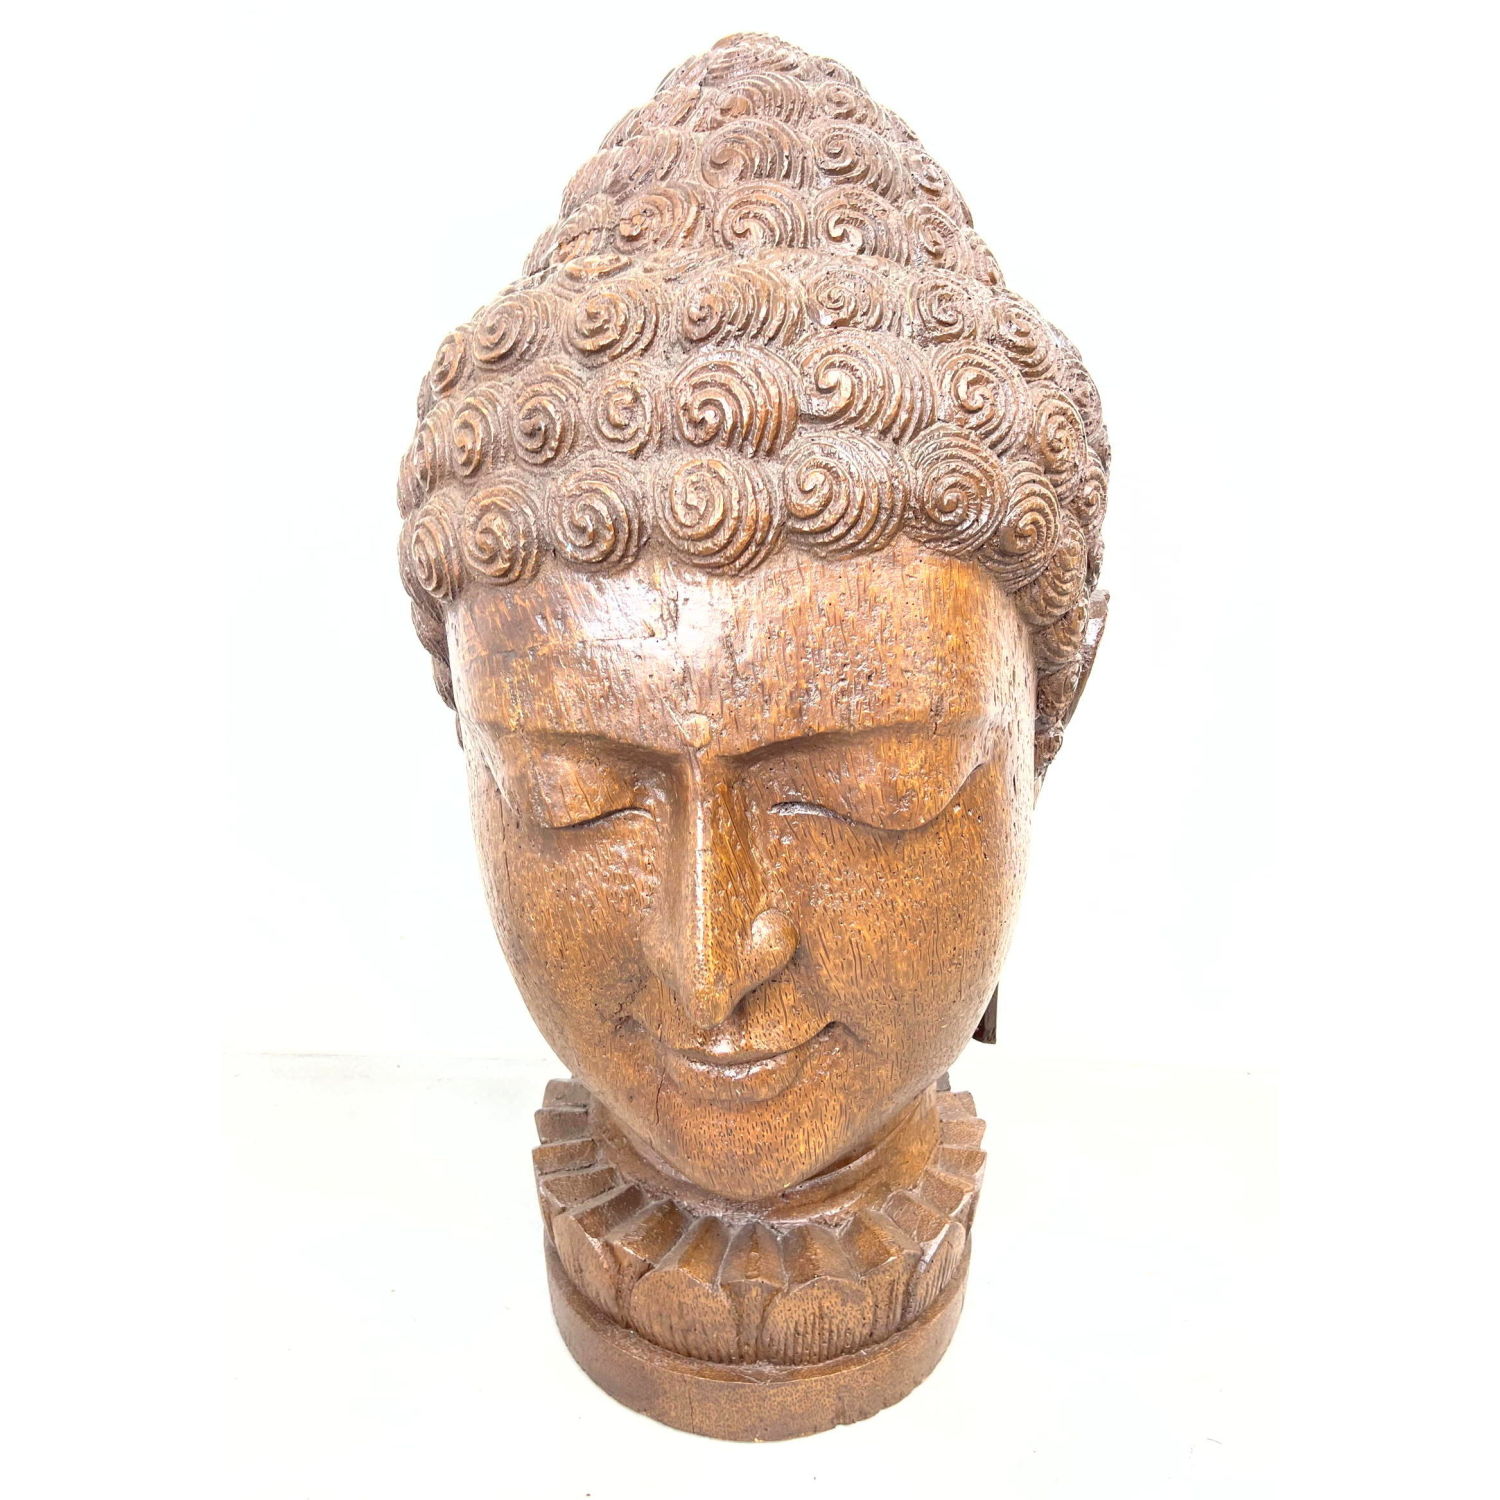 3 ft Large Carved Wood Buddha 2b9210